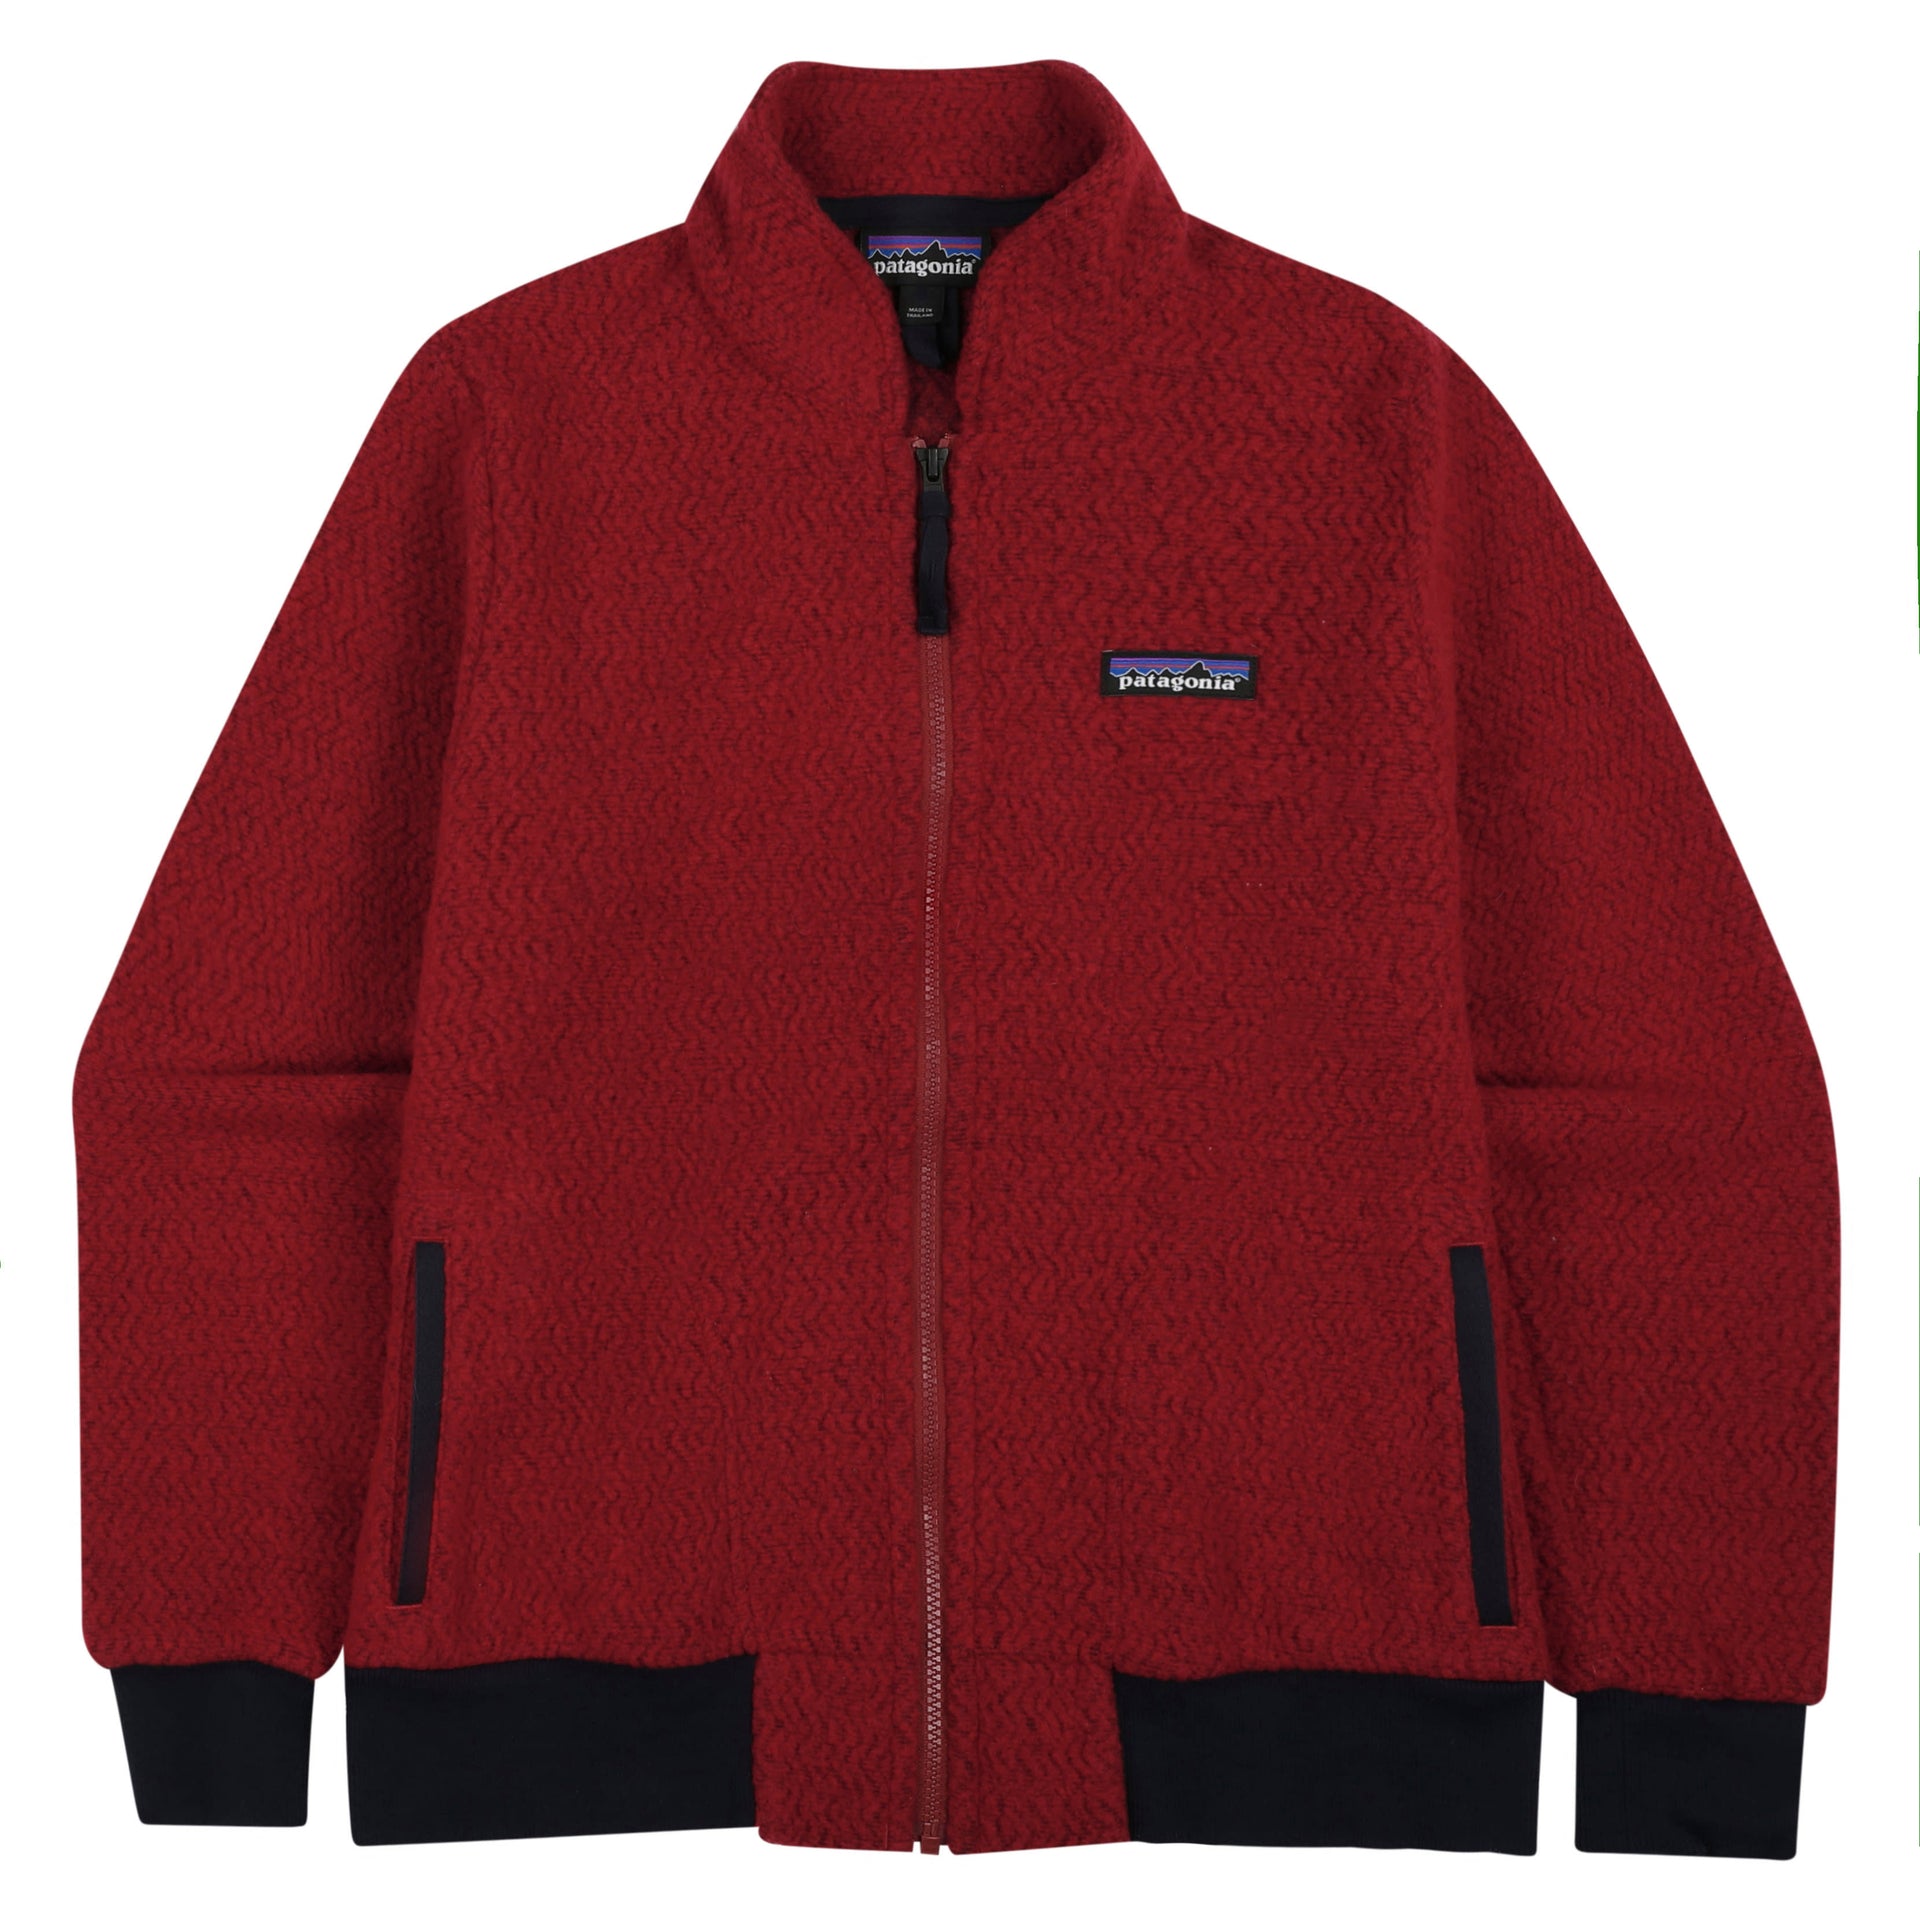 Patagonia Woolyester Fleece Jacket - Women's